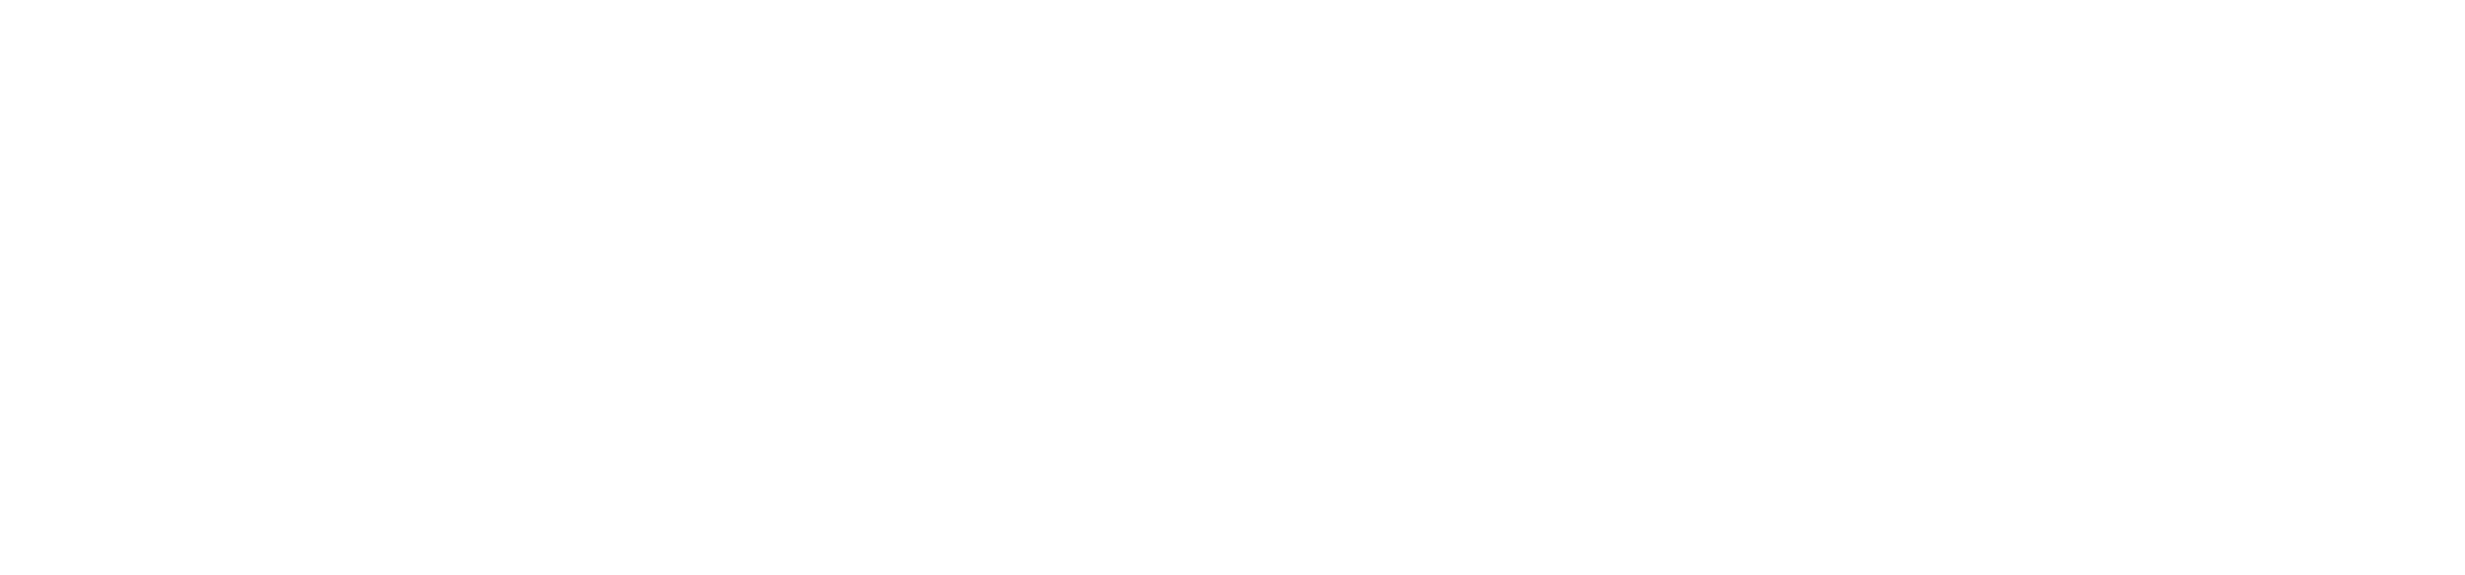 Westside Logo - Houston's Family Sports Fitness Club - Tennis & Fitness at Club Westside